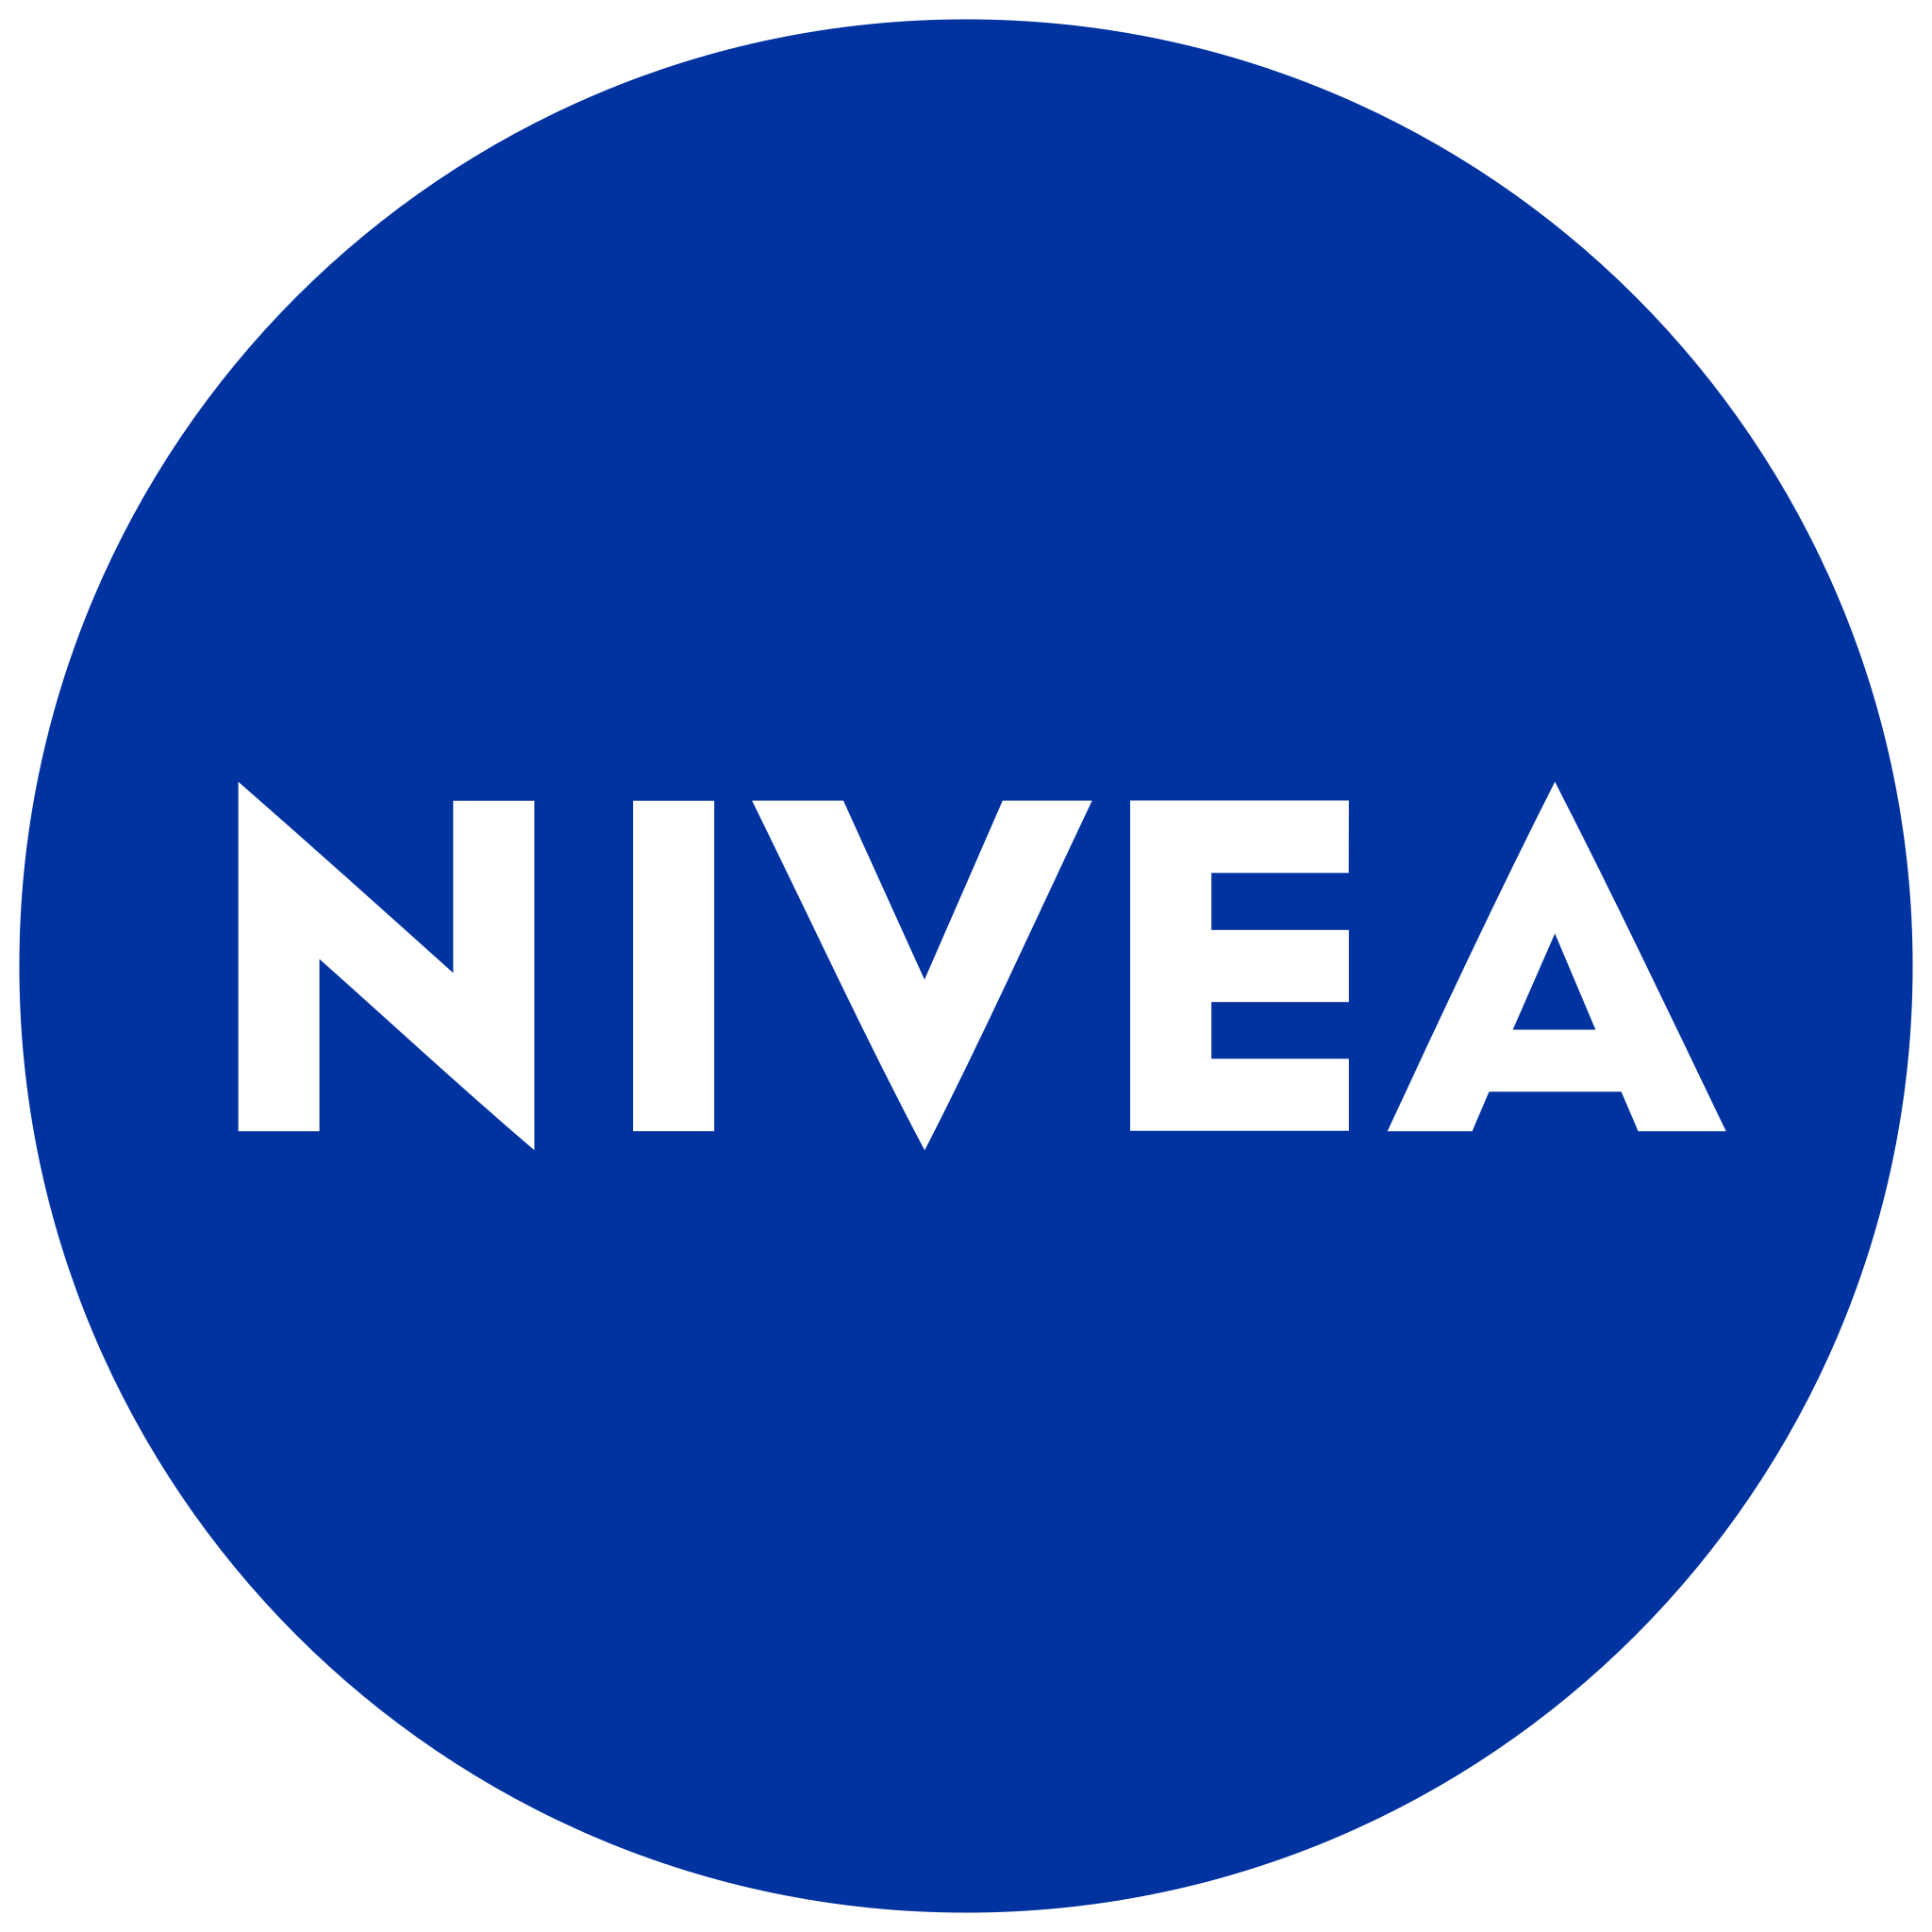 Nivea logo<br />
